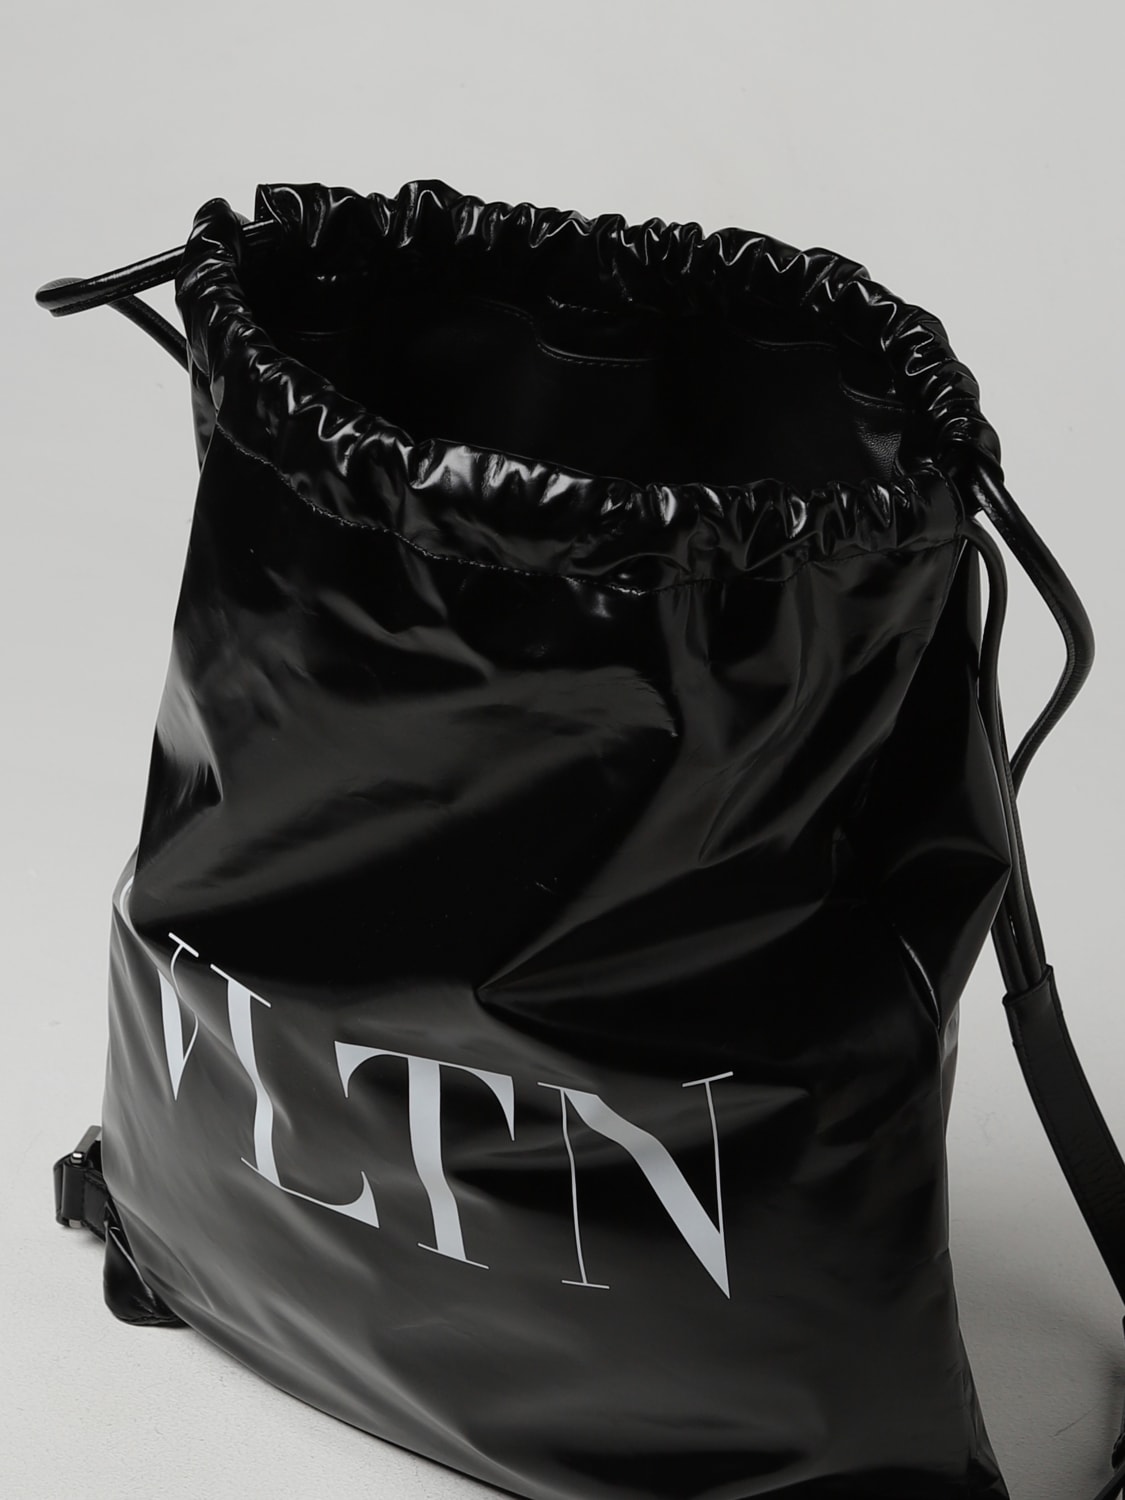 Black 'VLTN' Drawstring Backpack